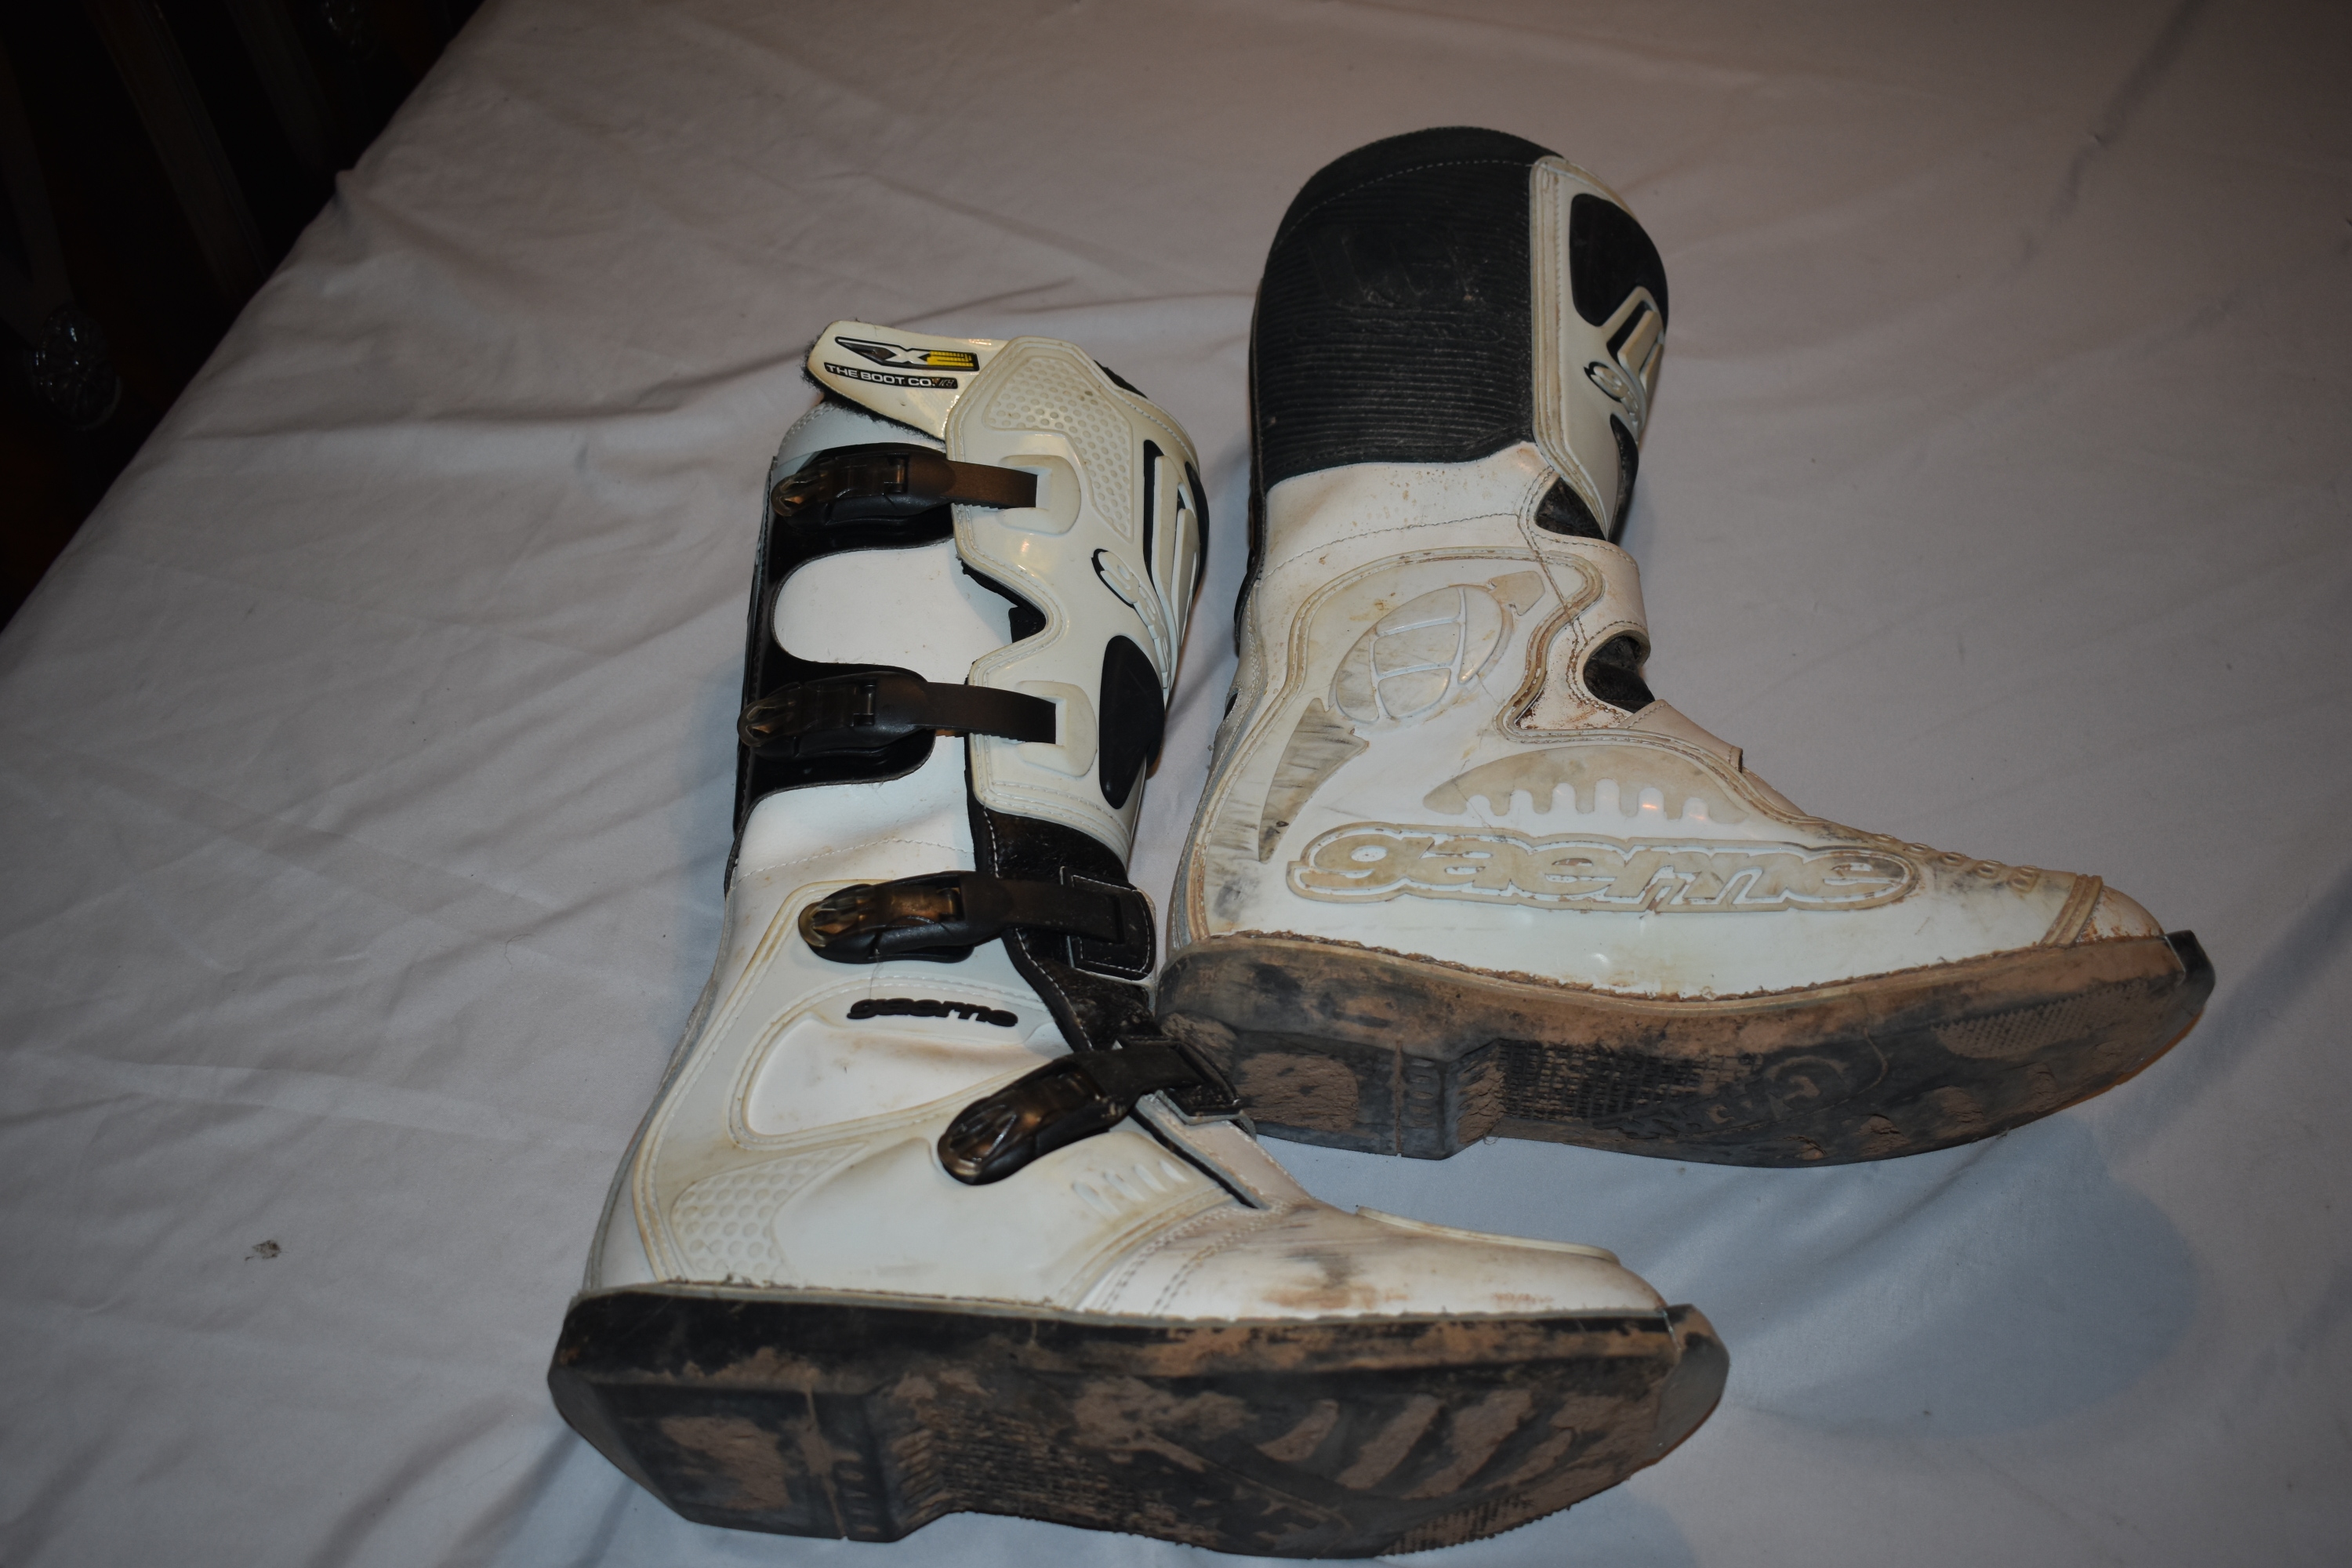 Gaern X2 Motocross Boots, White, Size 11